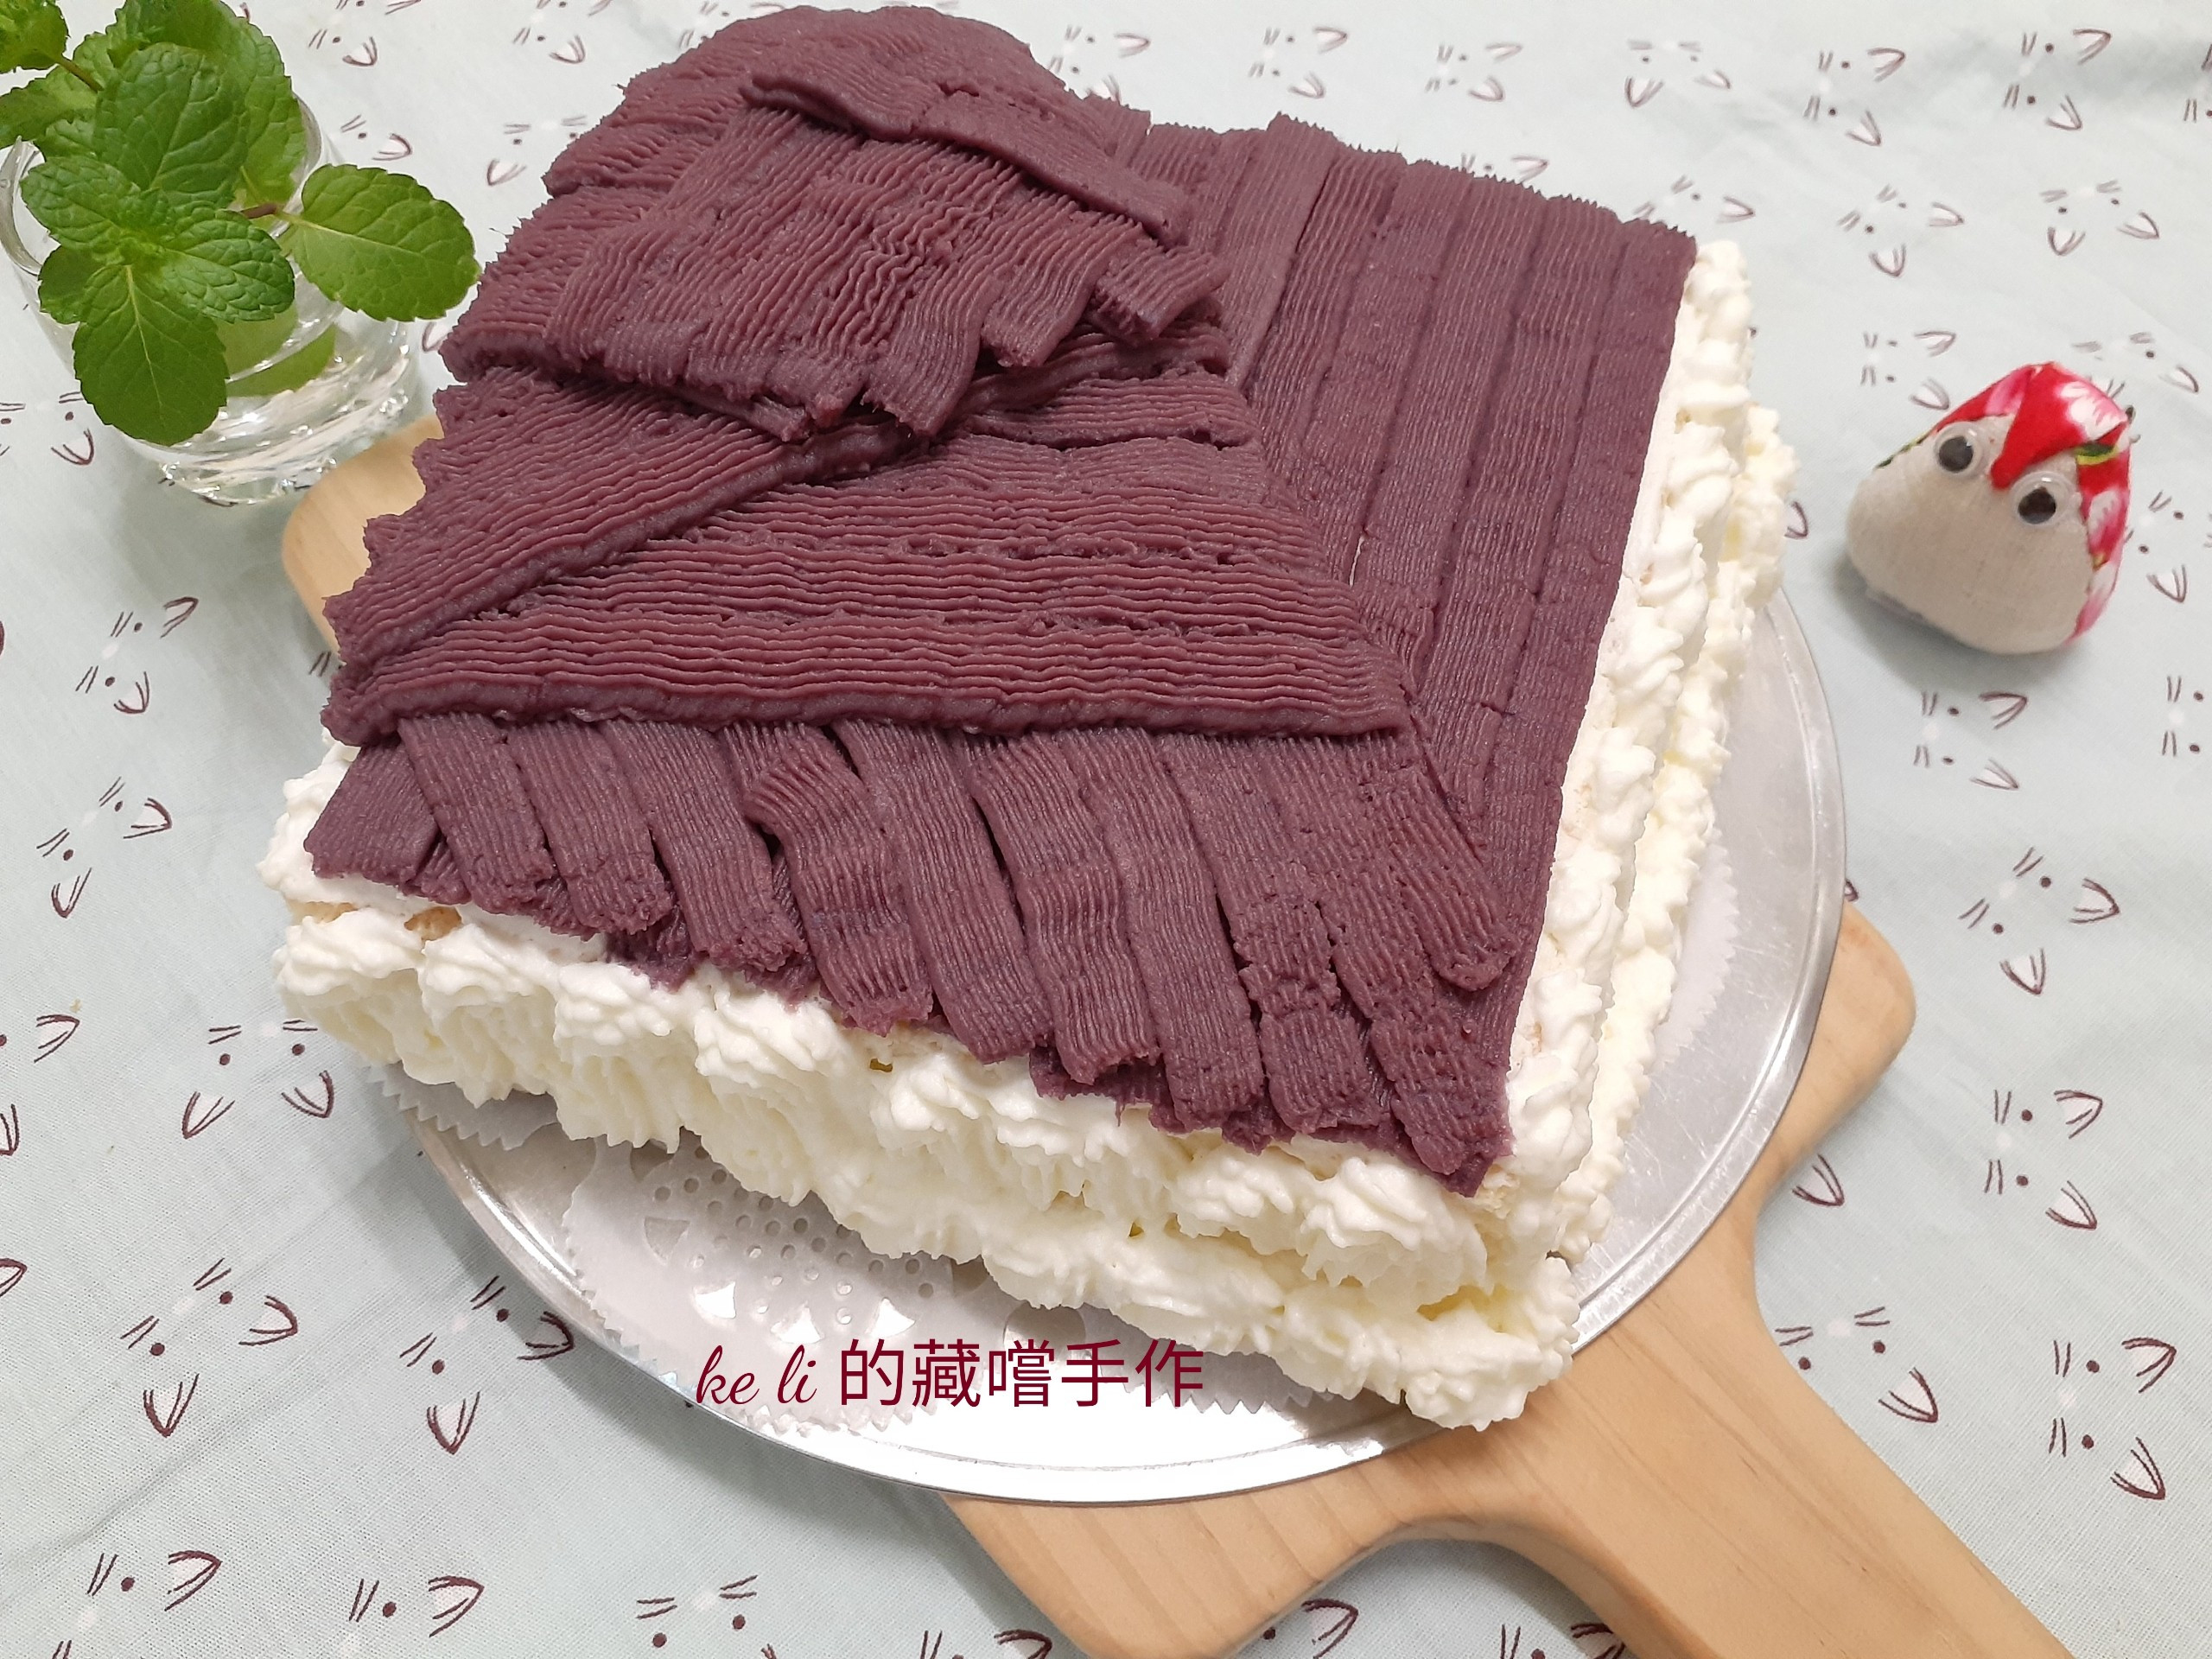 【戀家‧生活宅記】Homemade Heaven: 紫薯蛋糕 Sweet Purple Potato Cake (附食譜)